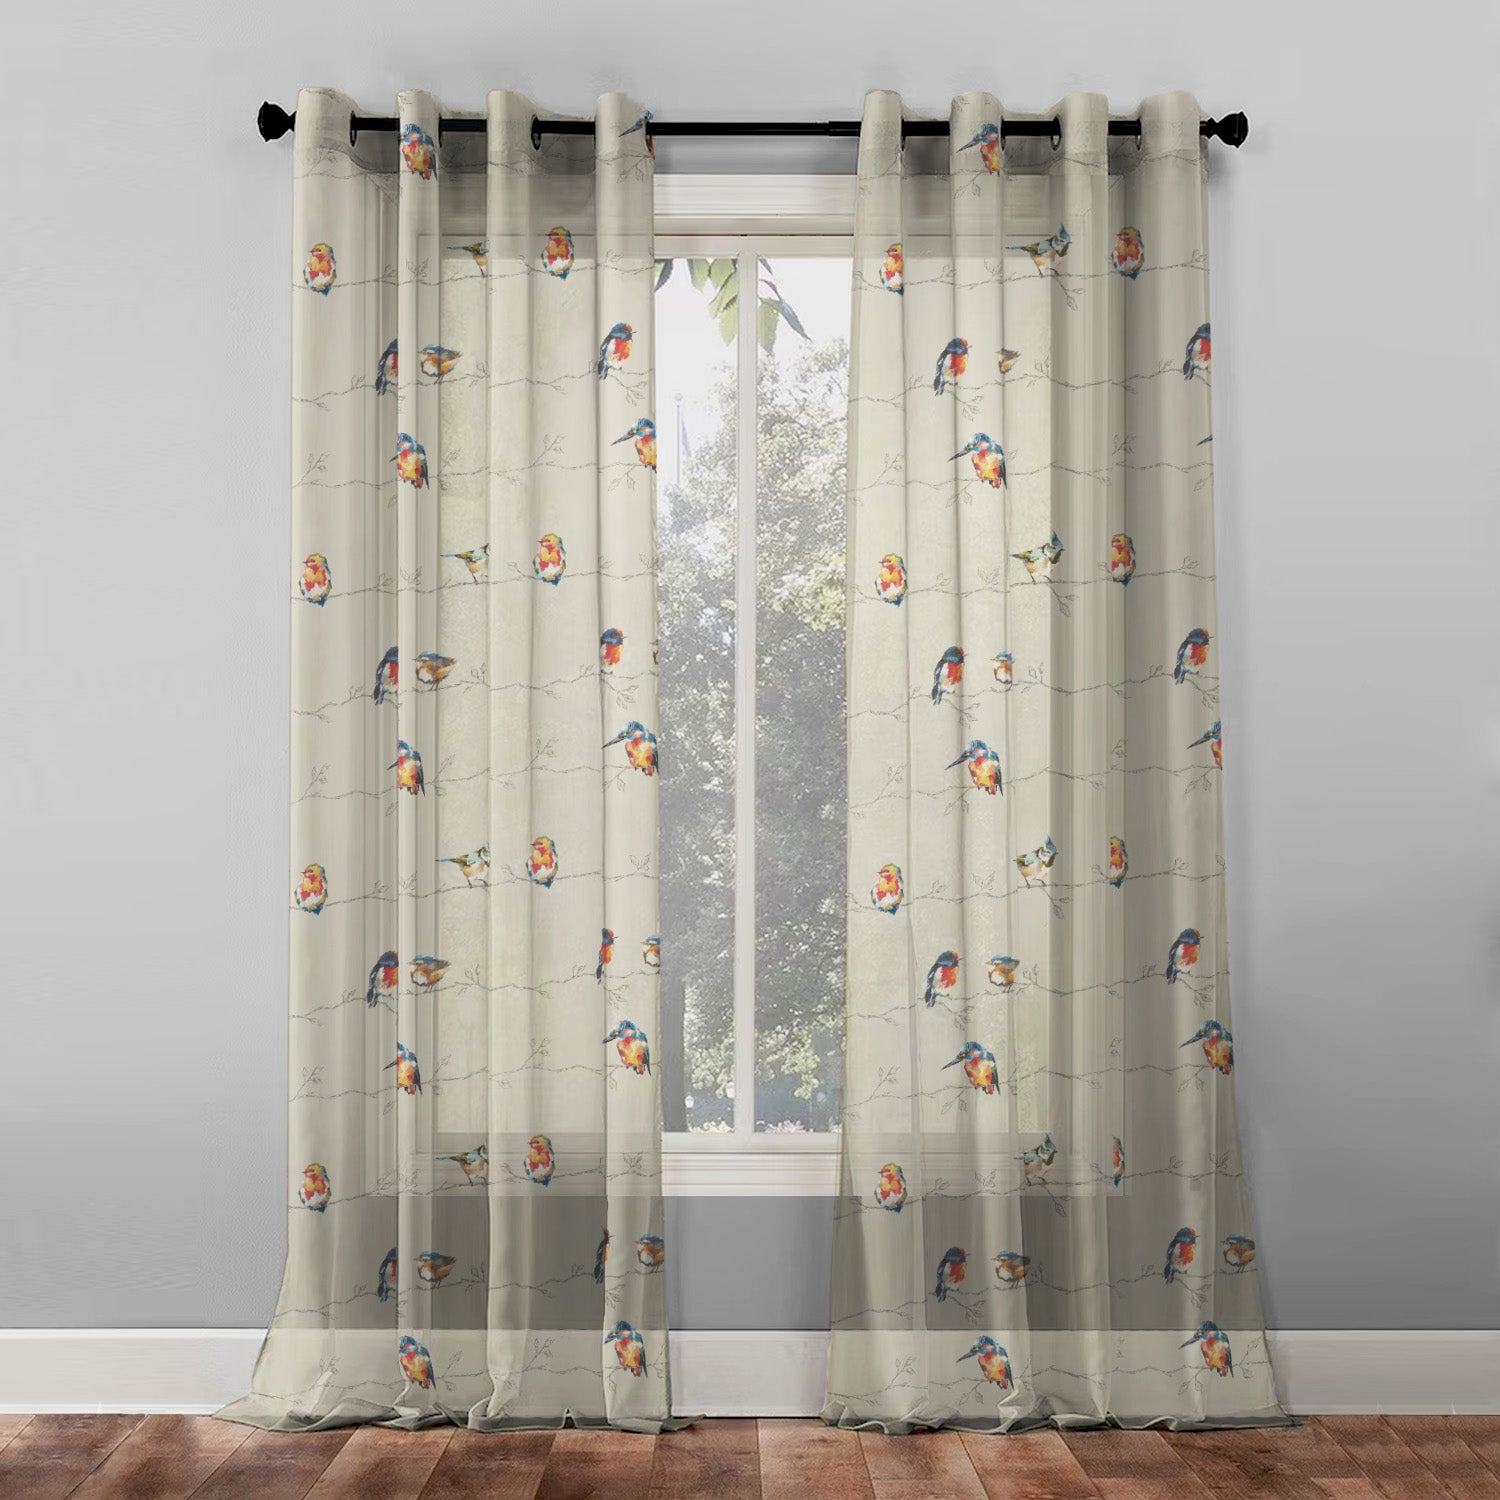 Buy Window Curtains online